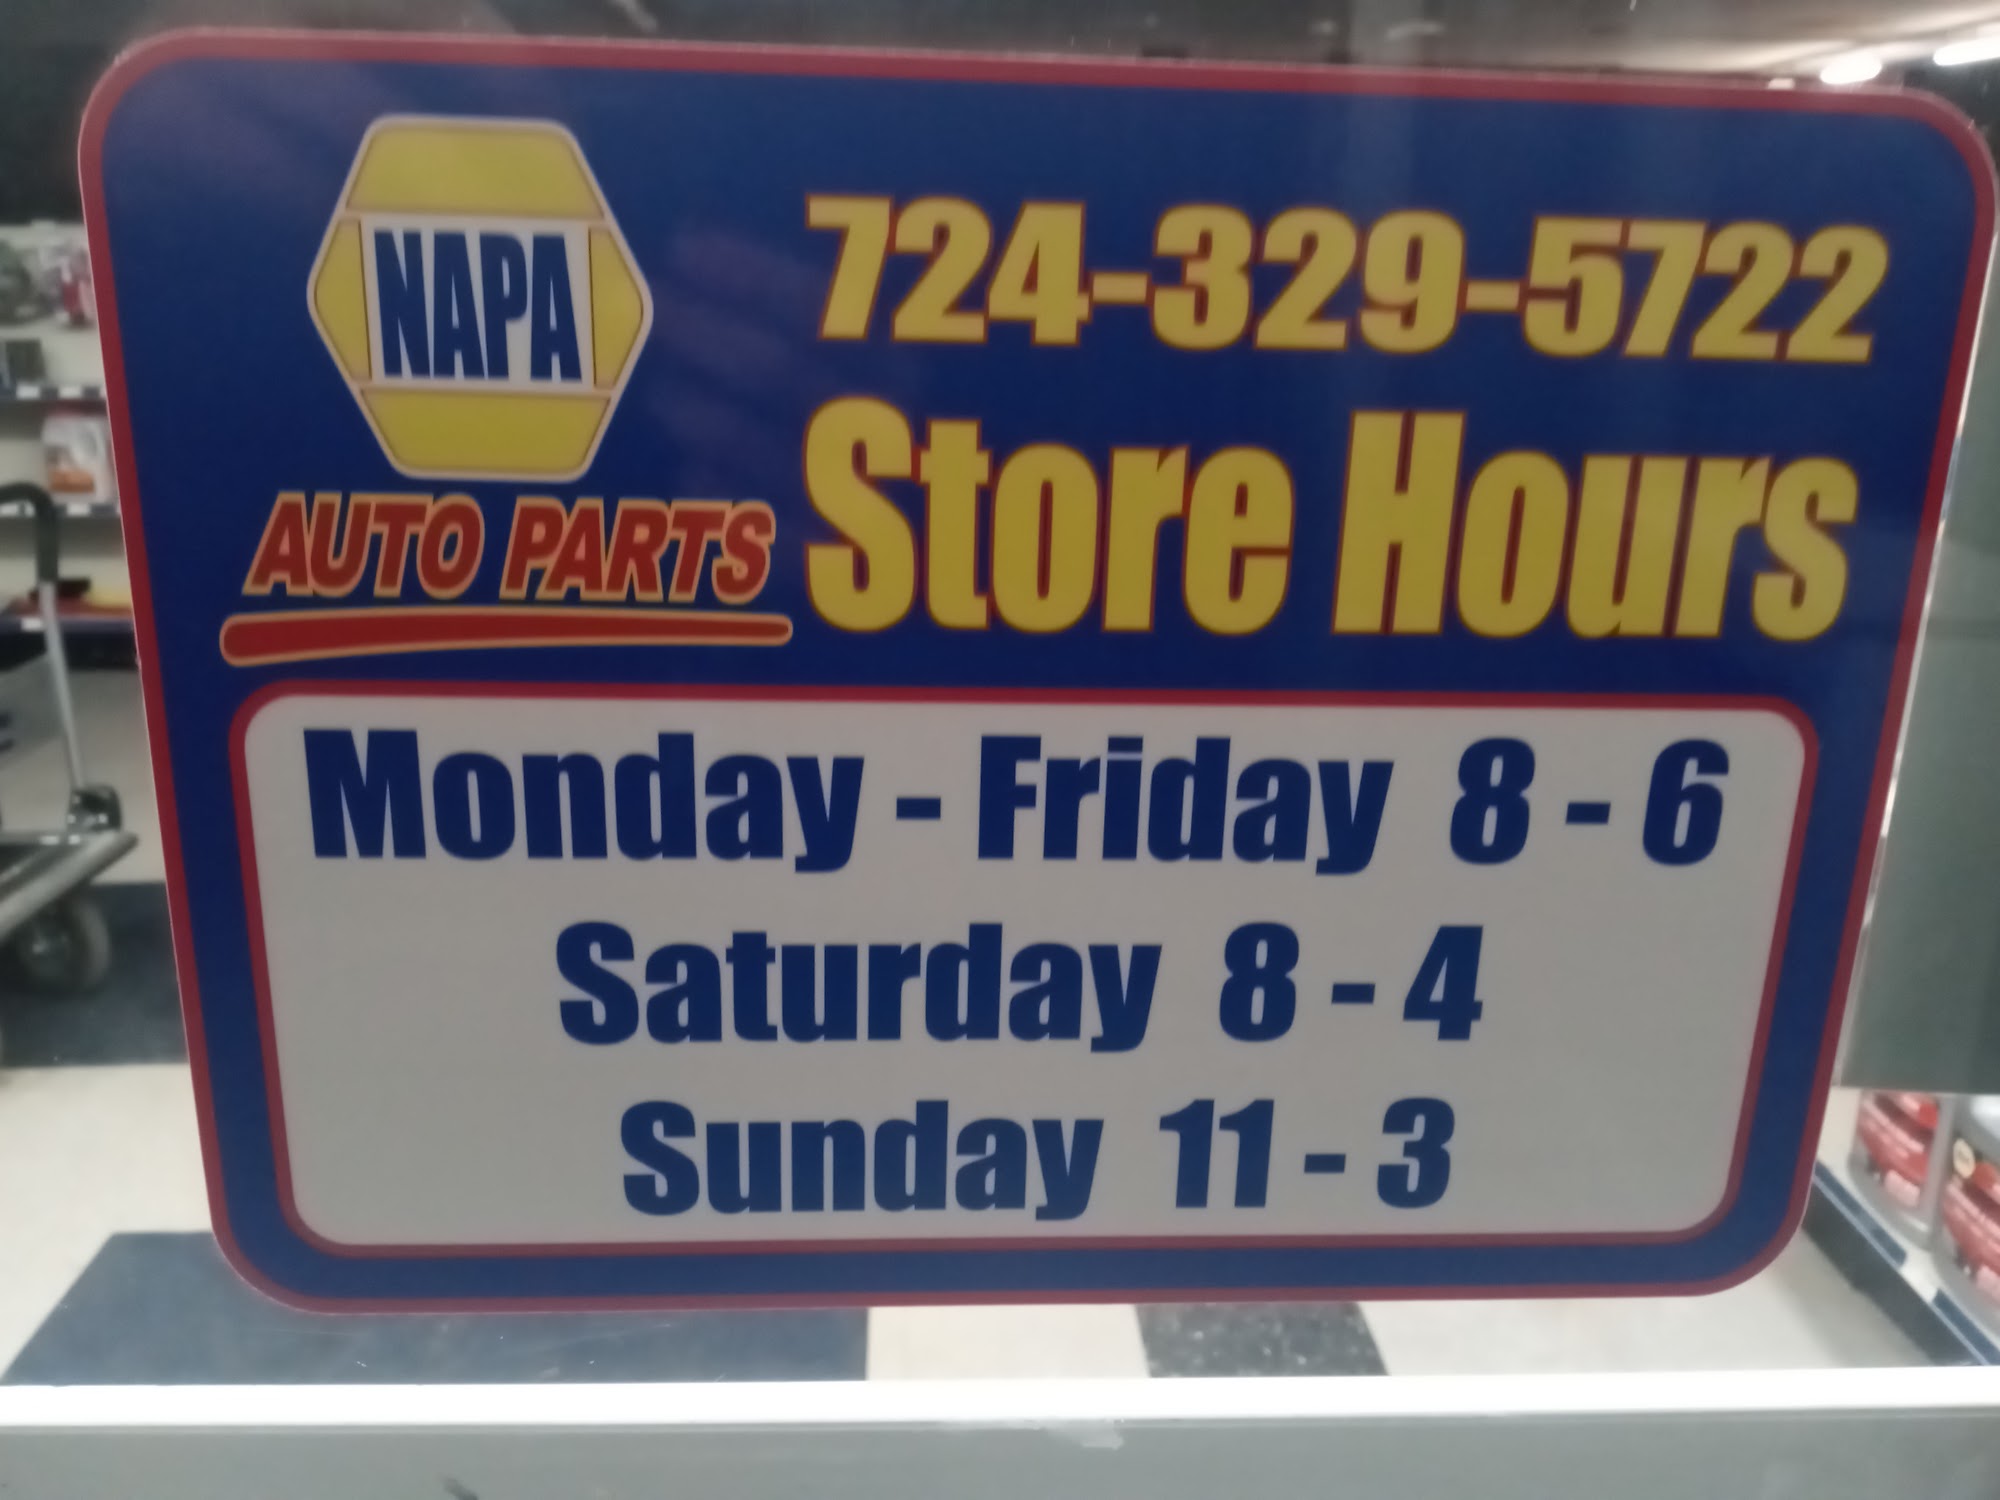 NAPA Auto Parts - Fayette Parts Service